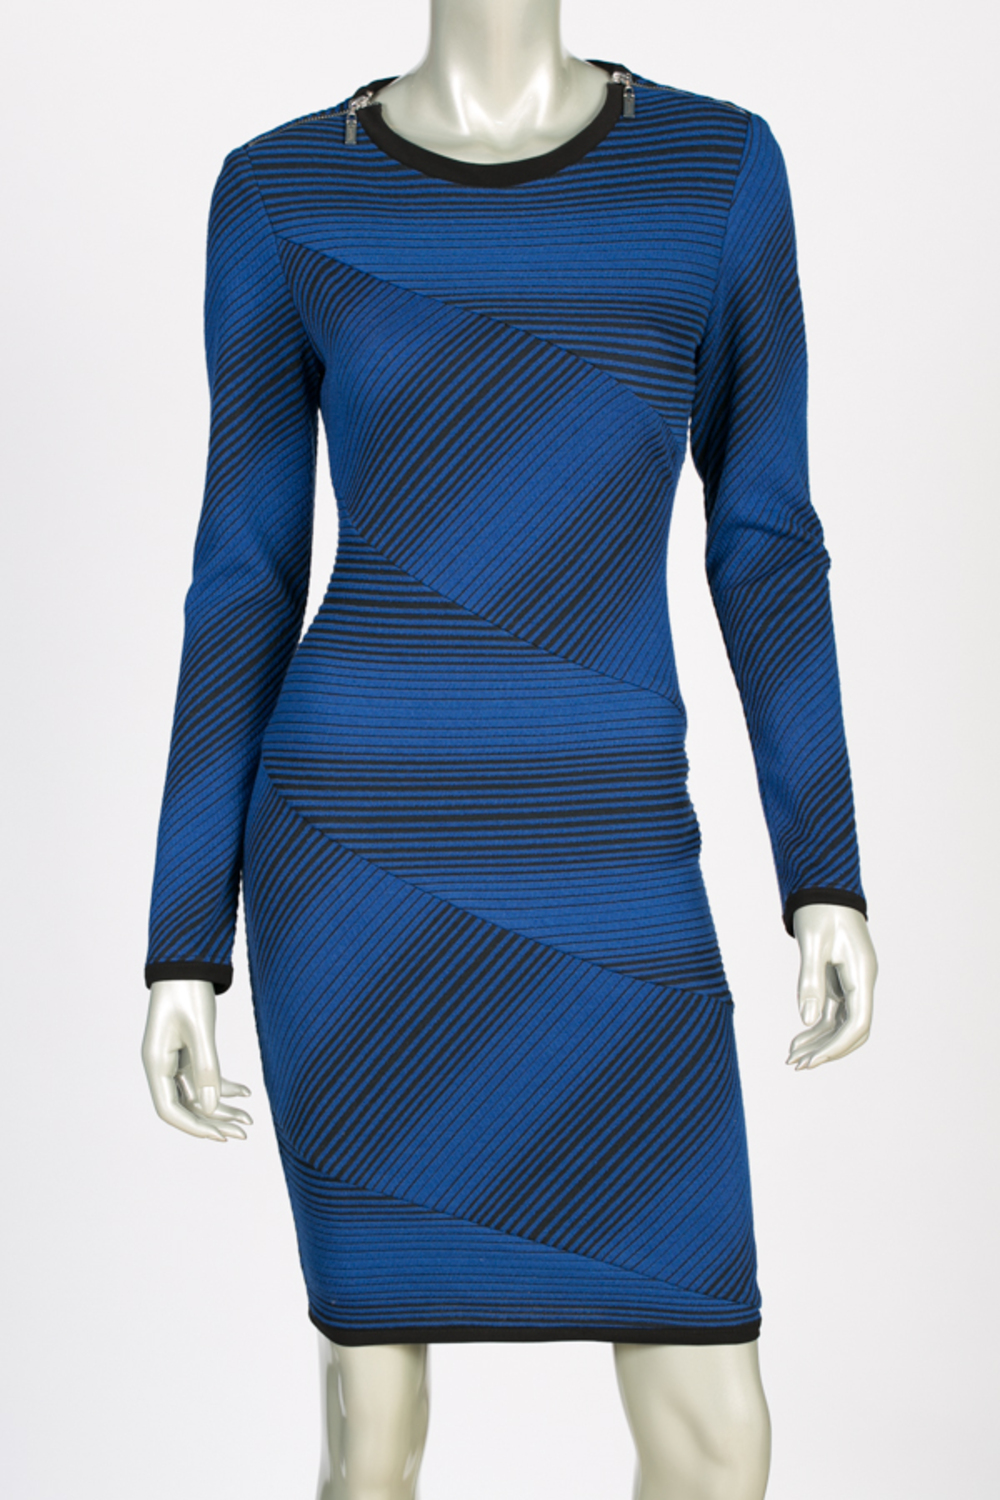 Joseph Ribkoff robe style 144900. Bleu/noir